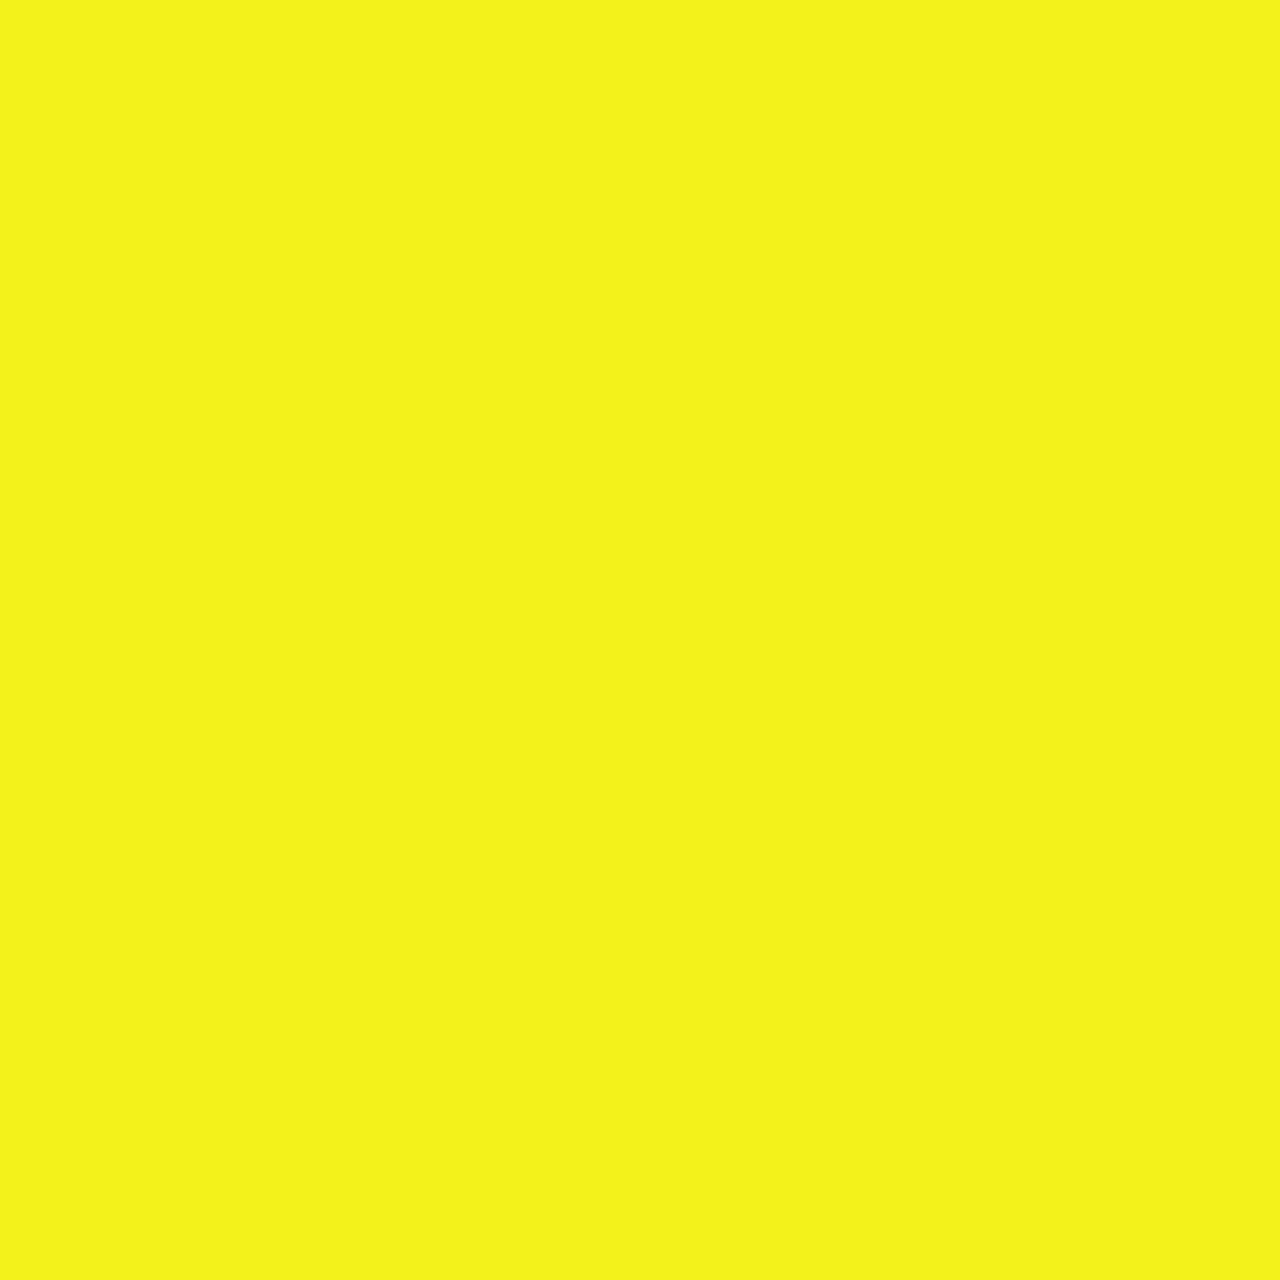 Angelus Neon Paint - Sunset Yellow 